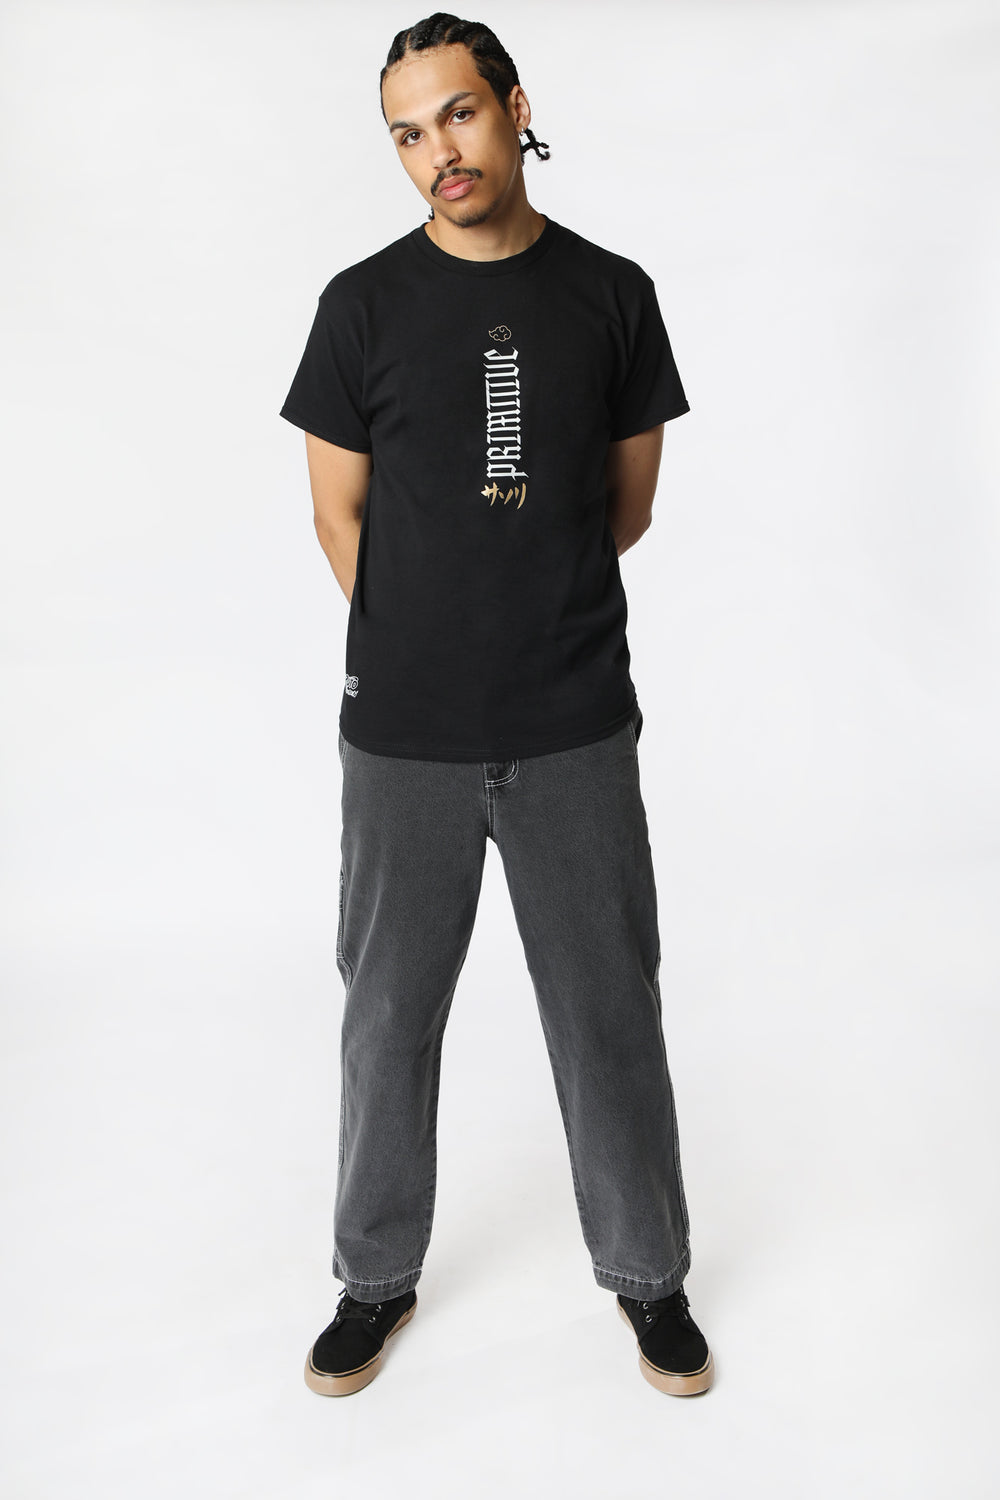 Primitive x Naruto Shippuden Sasori T-Shirt Black